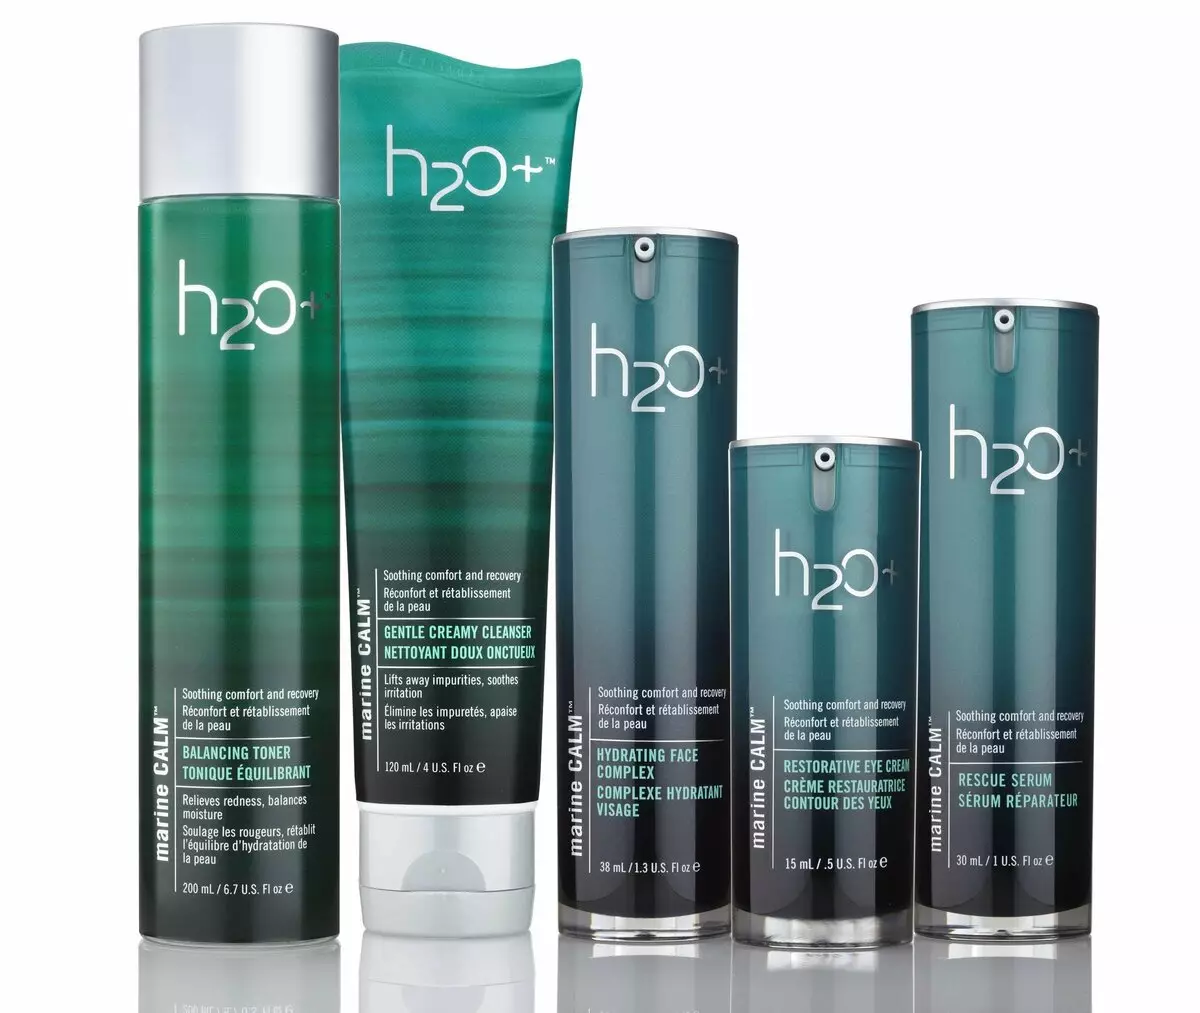 Kozmetika H2O +: Pregled proizvoda, prednosti i mana, izbor i recenzije 4542_20